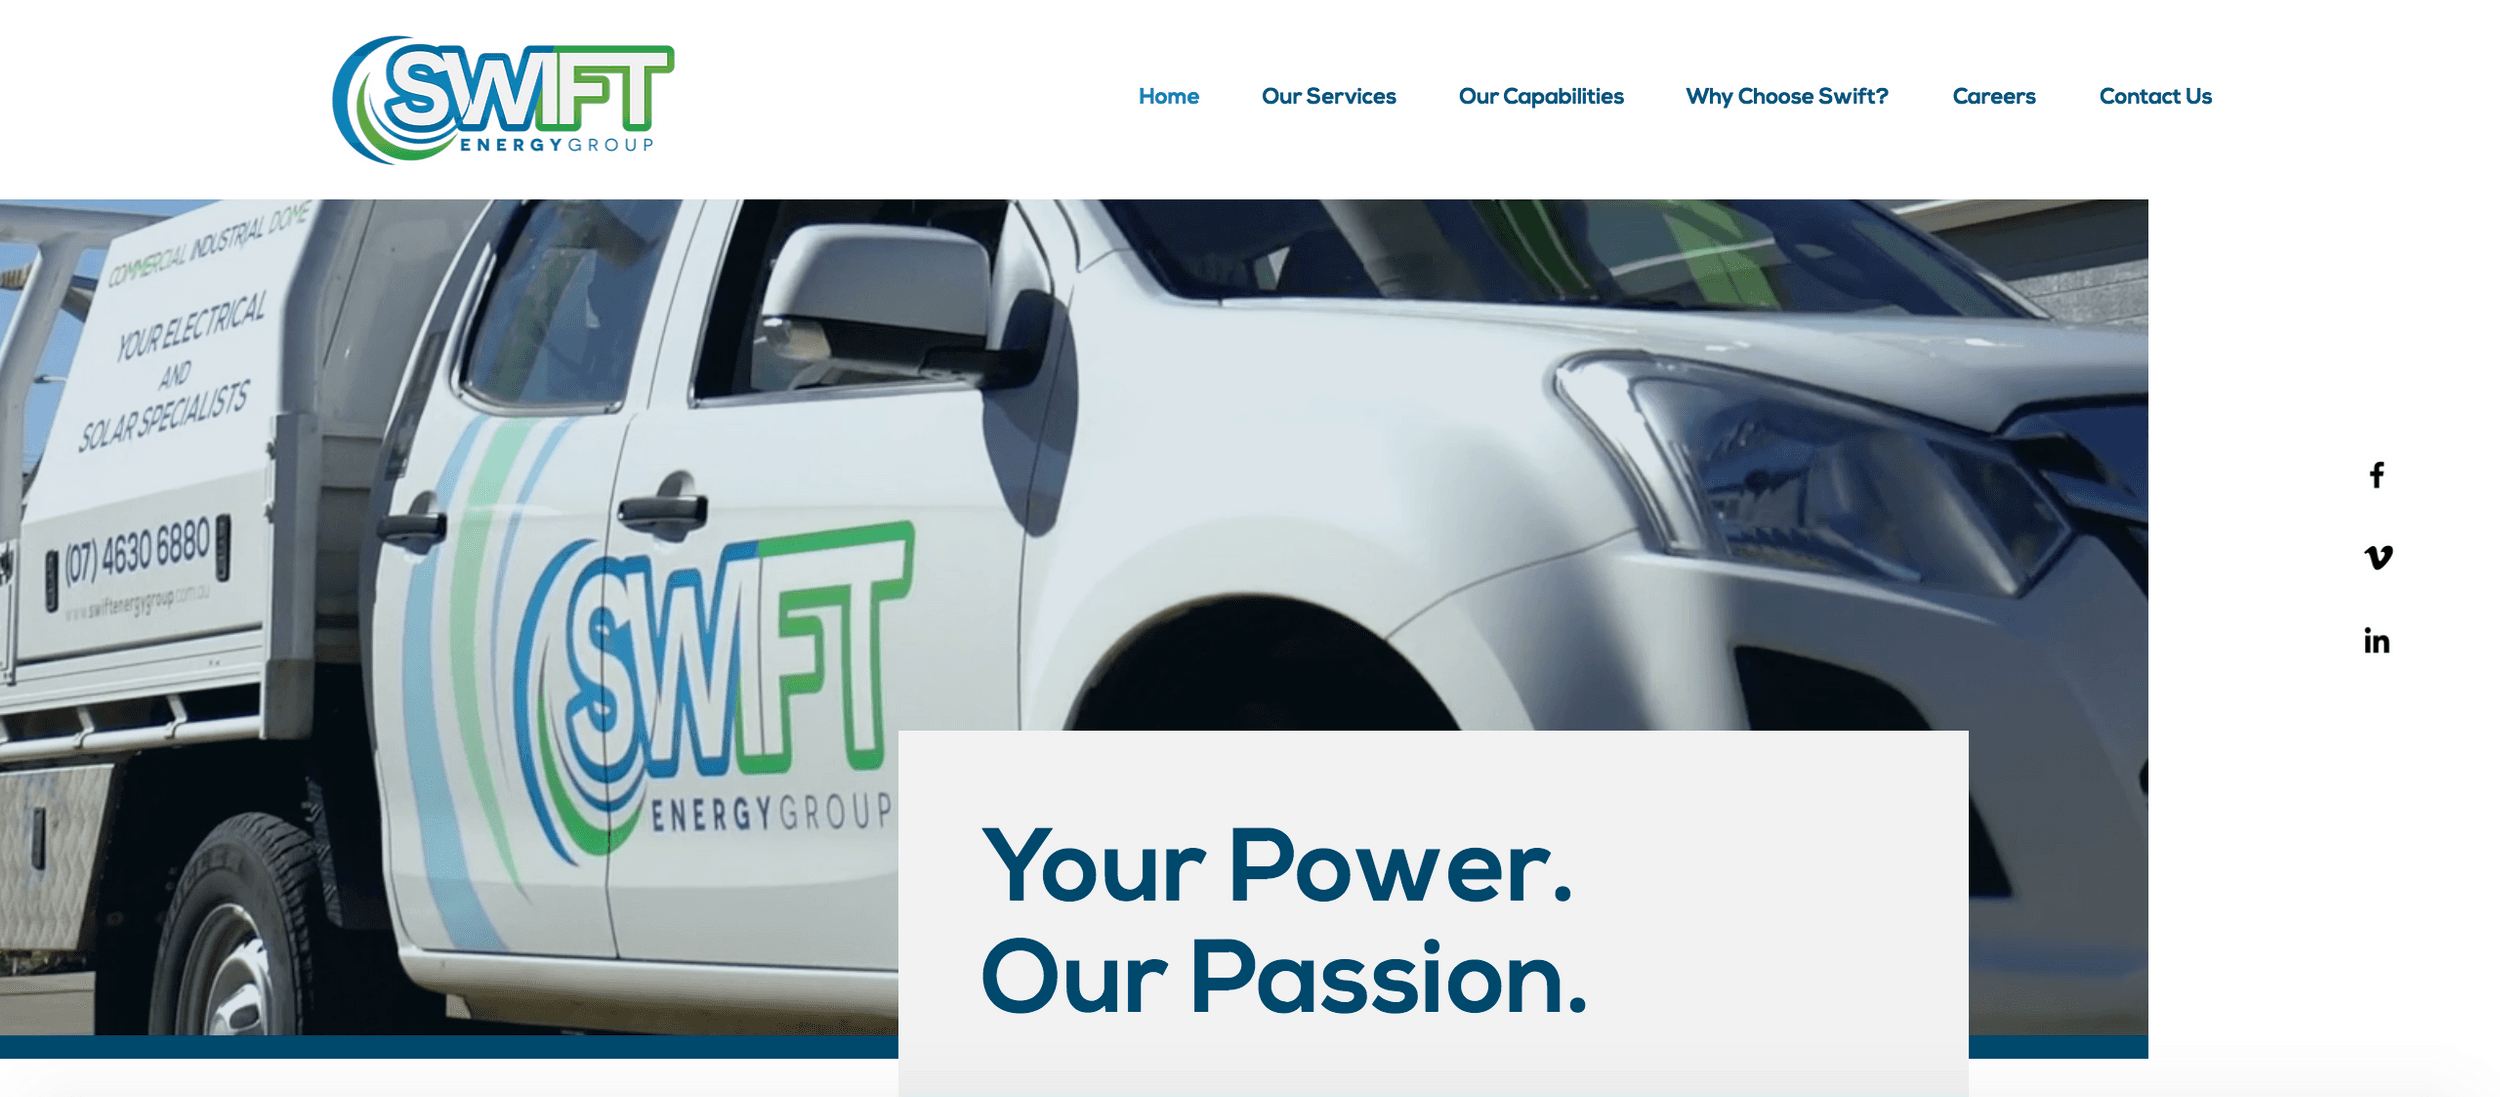 Product Swift Energy Group | Capabilities image